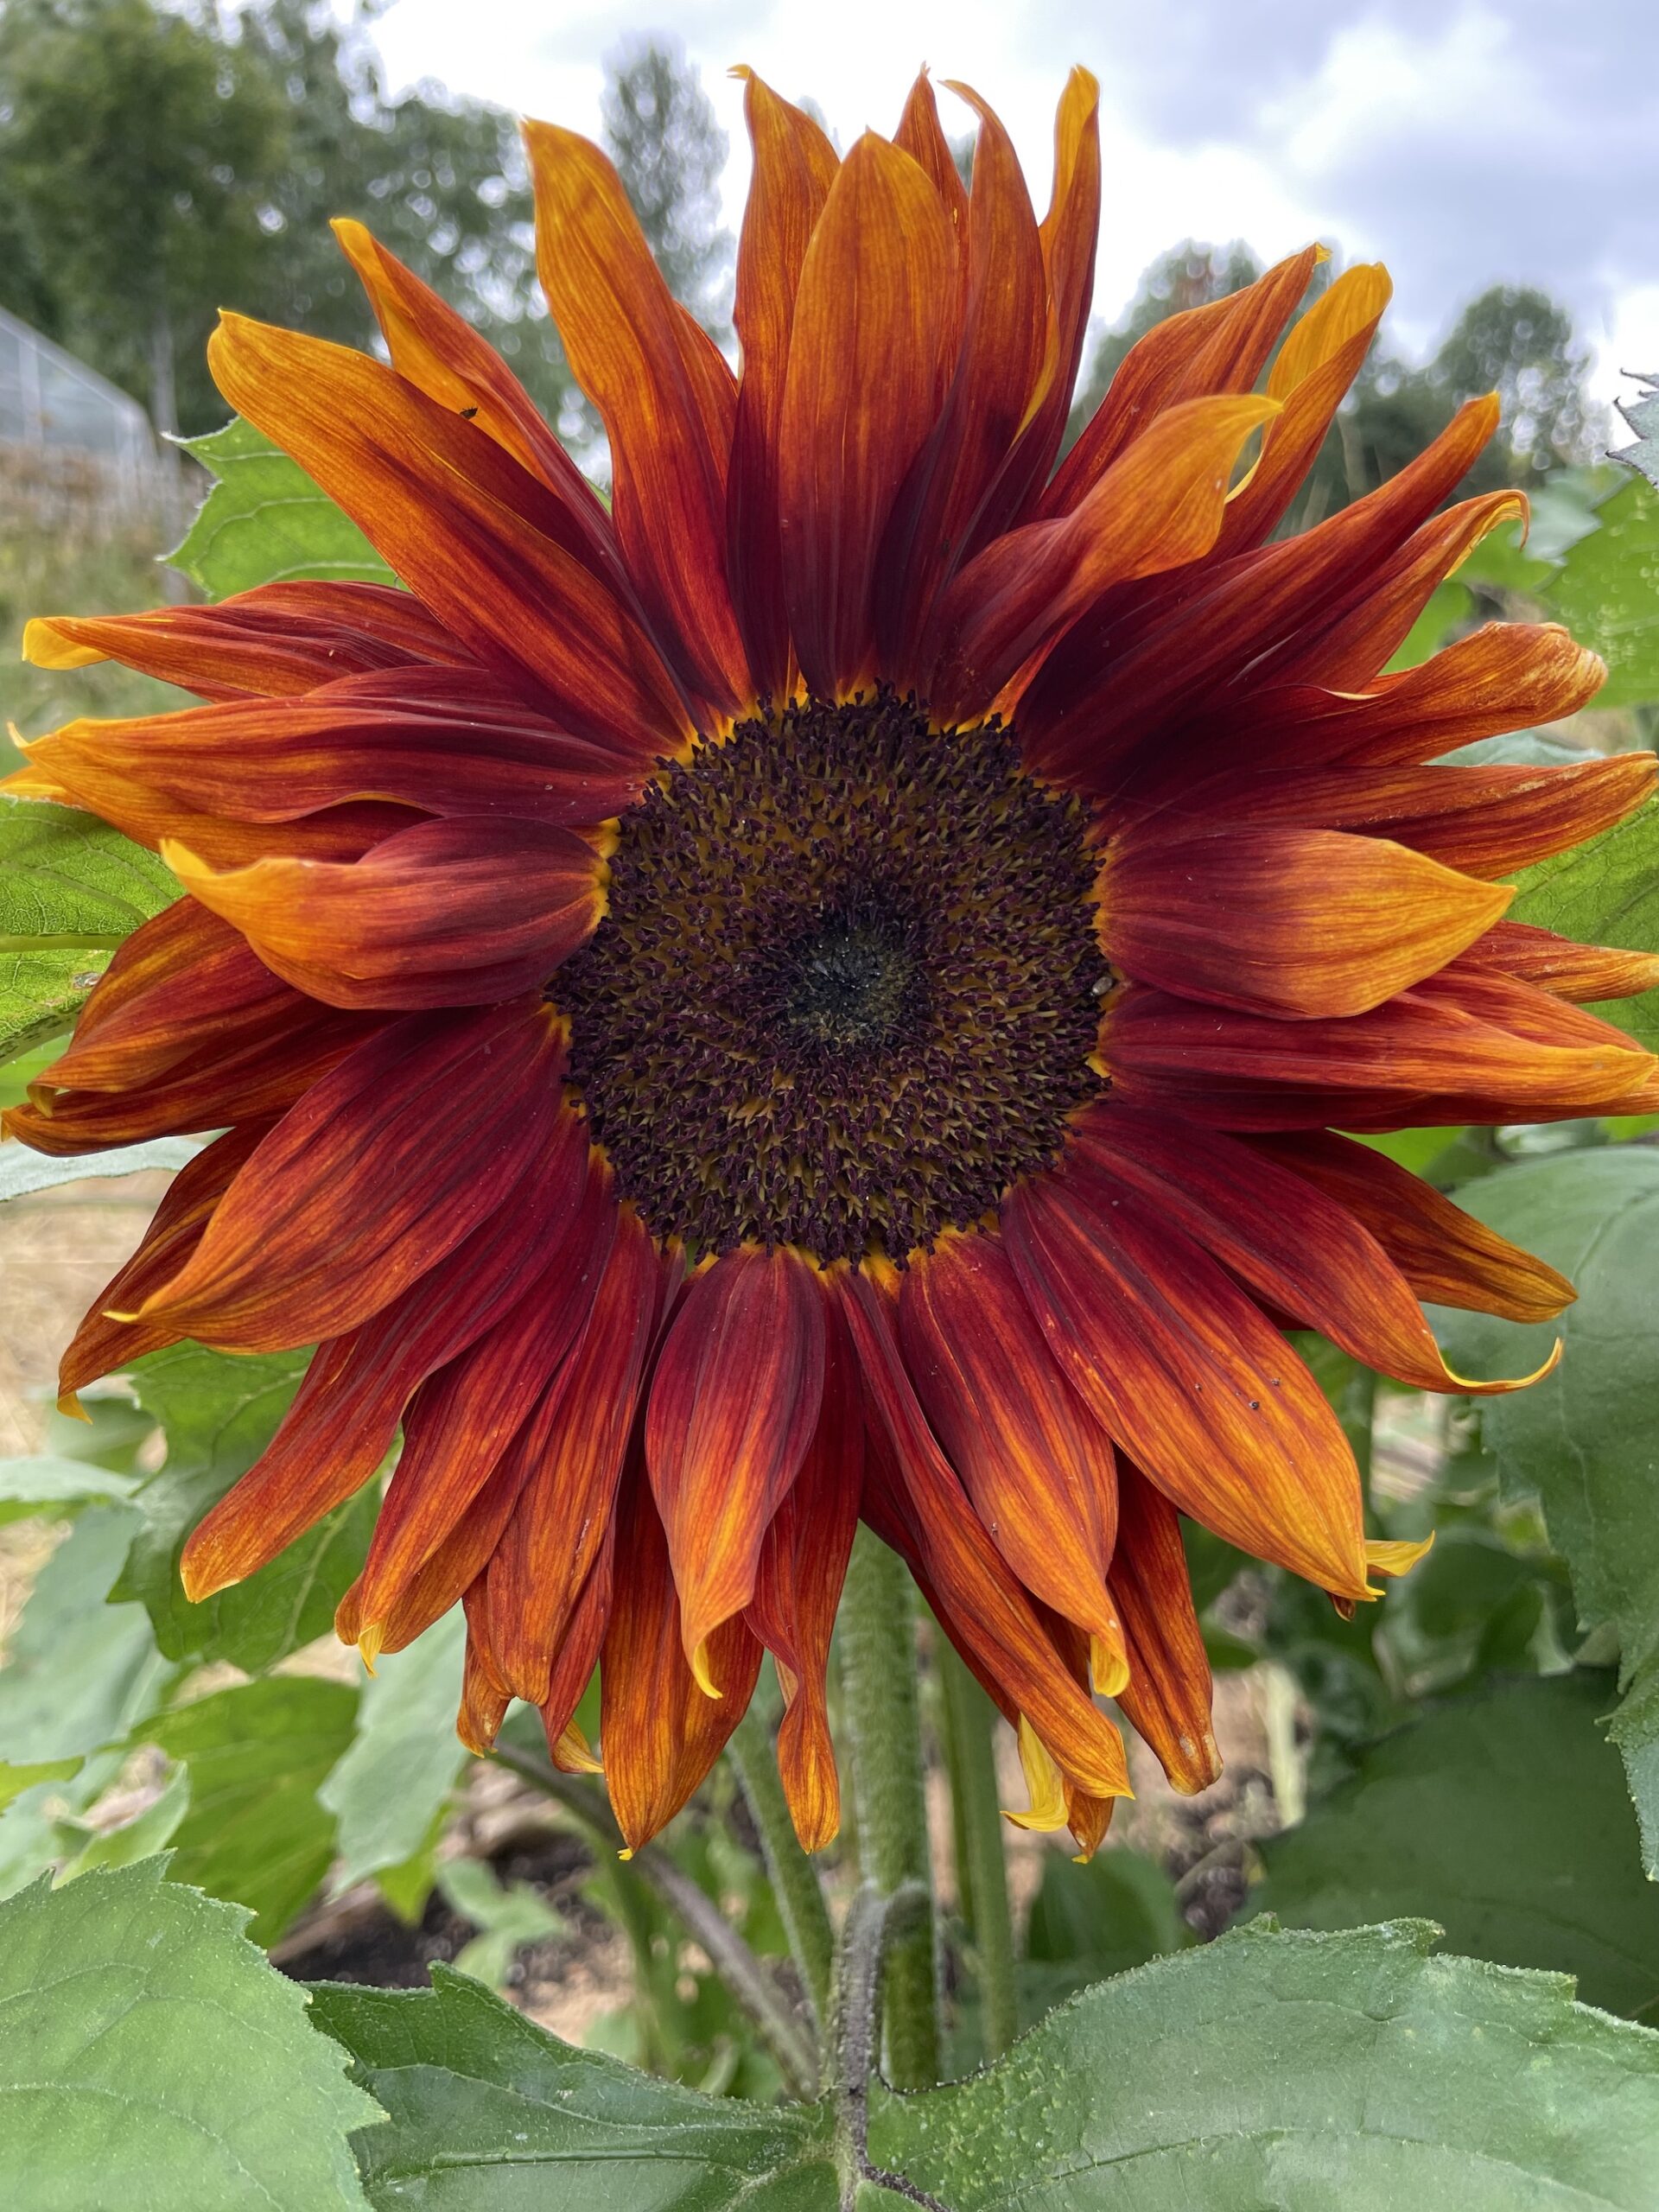 Fiery orange sunflower up close shot